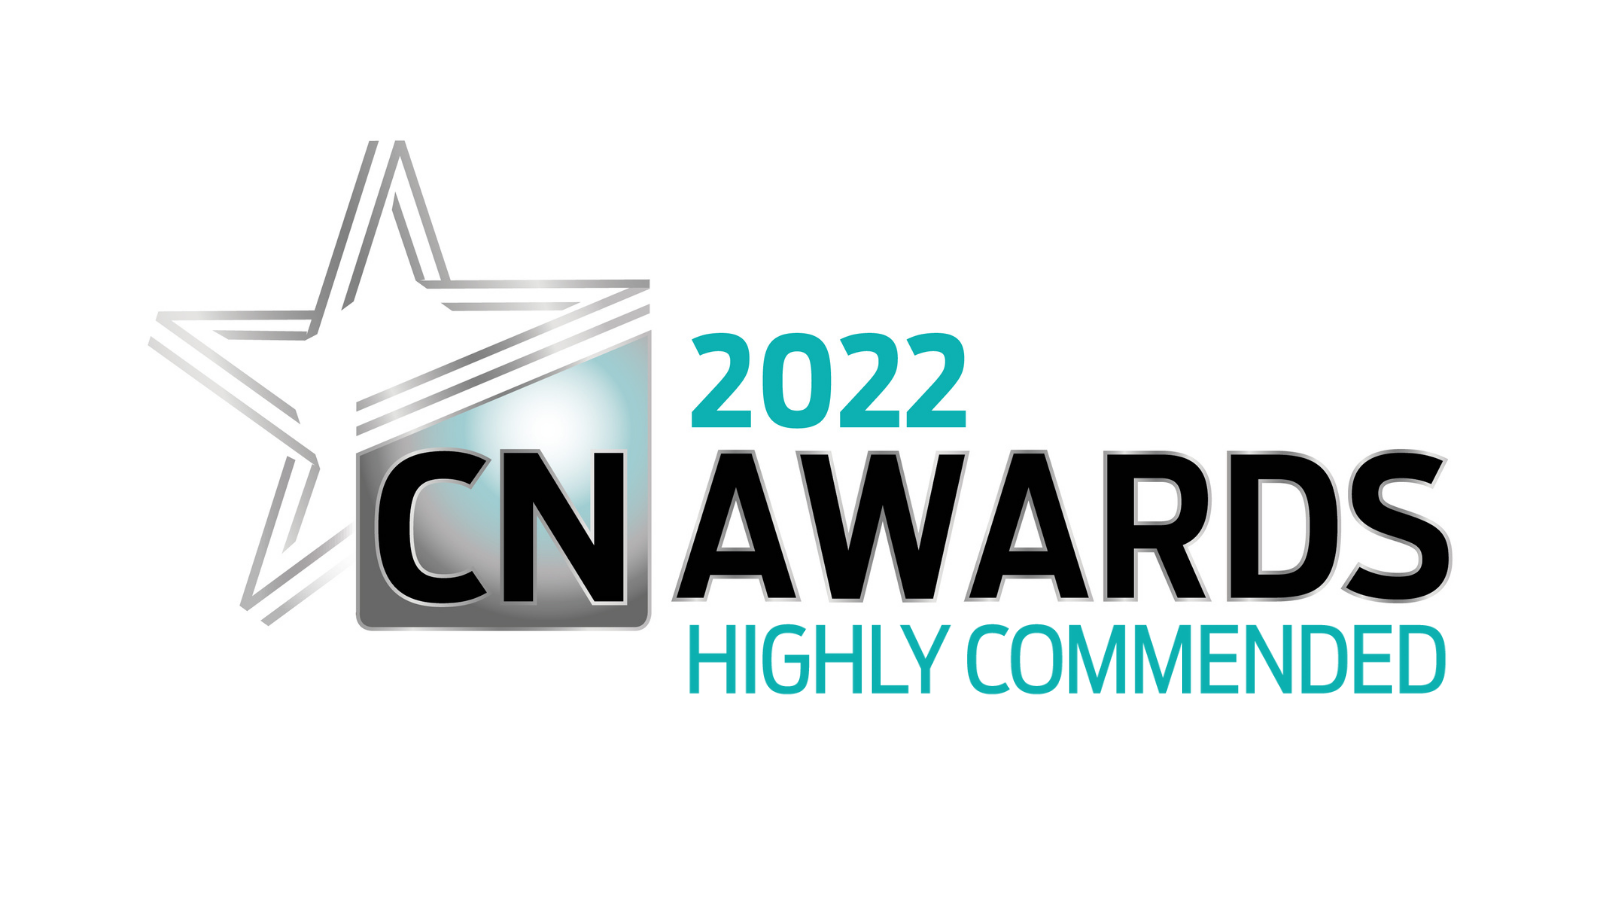 CN Awards 2022 Highly Commended logo.